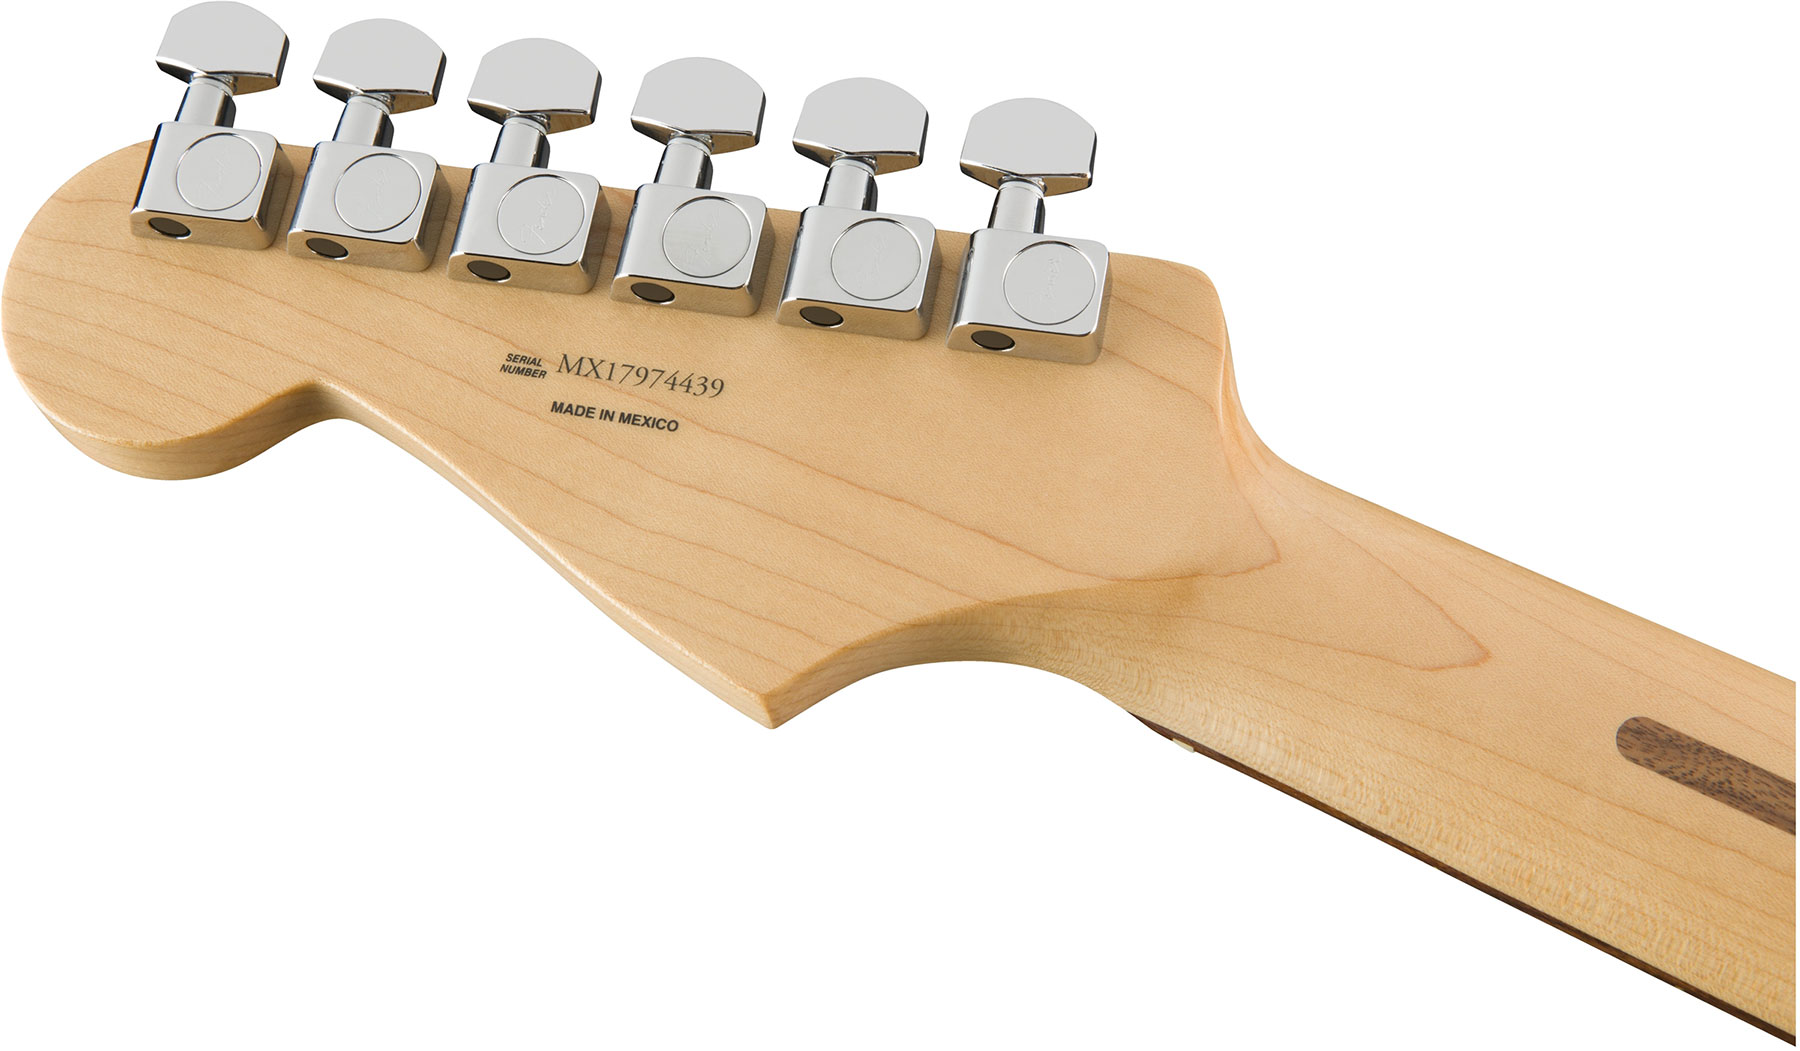 Fender Strat Player Mex Sss Pf - Black - Guitarra eléctrica con forma de str. - Variation 3